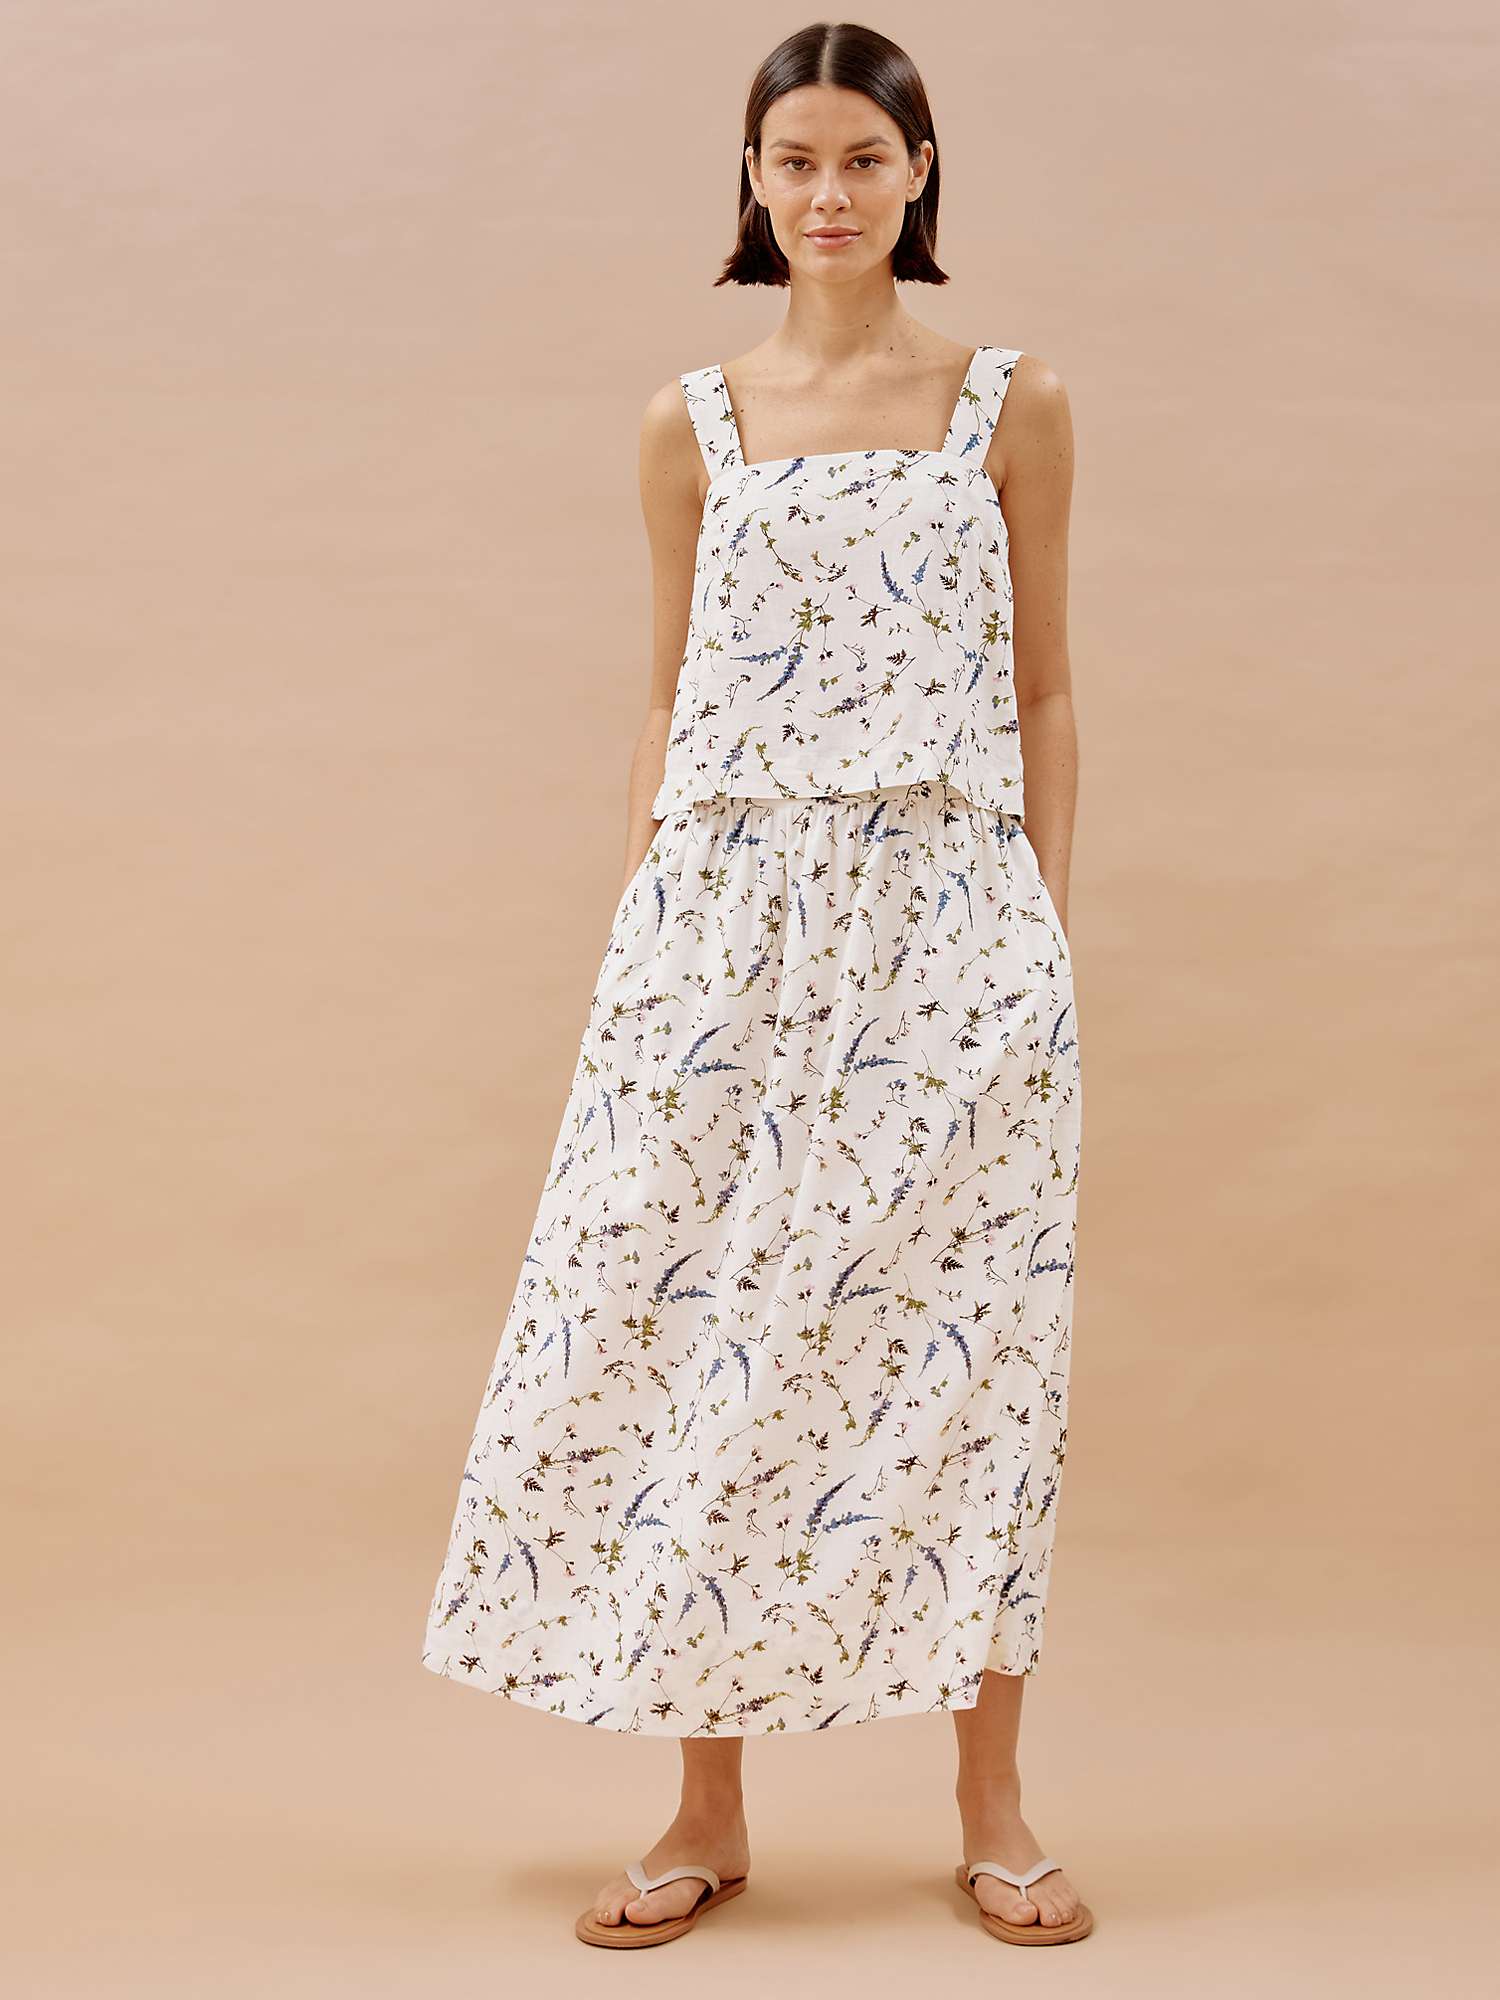 Buy Albaray Sprig Floral Skirt, White/Multi Online at johnlewis.com